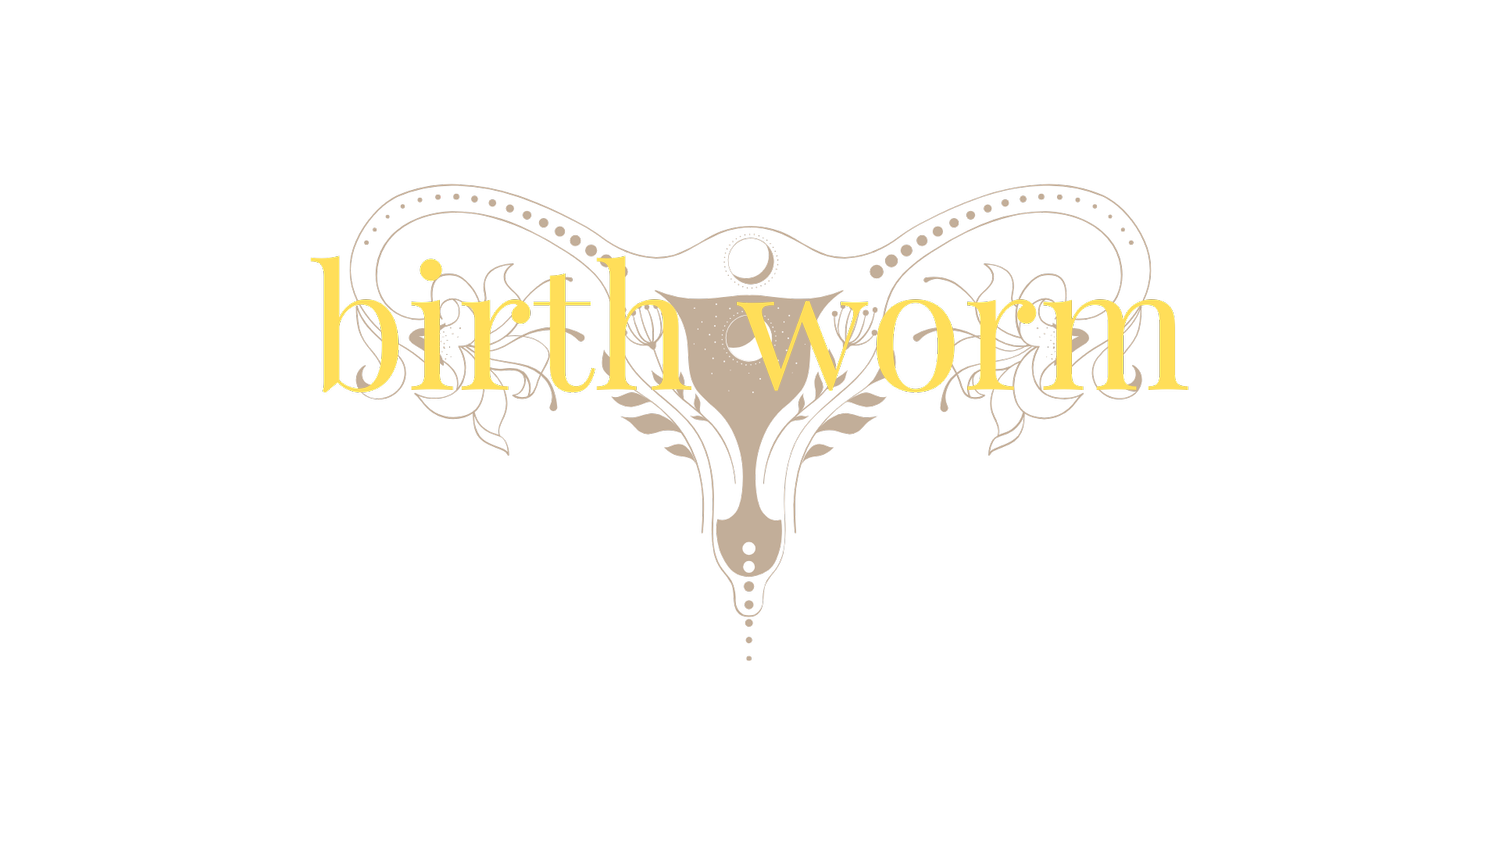 birth worm